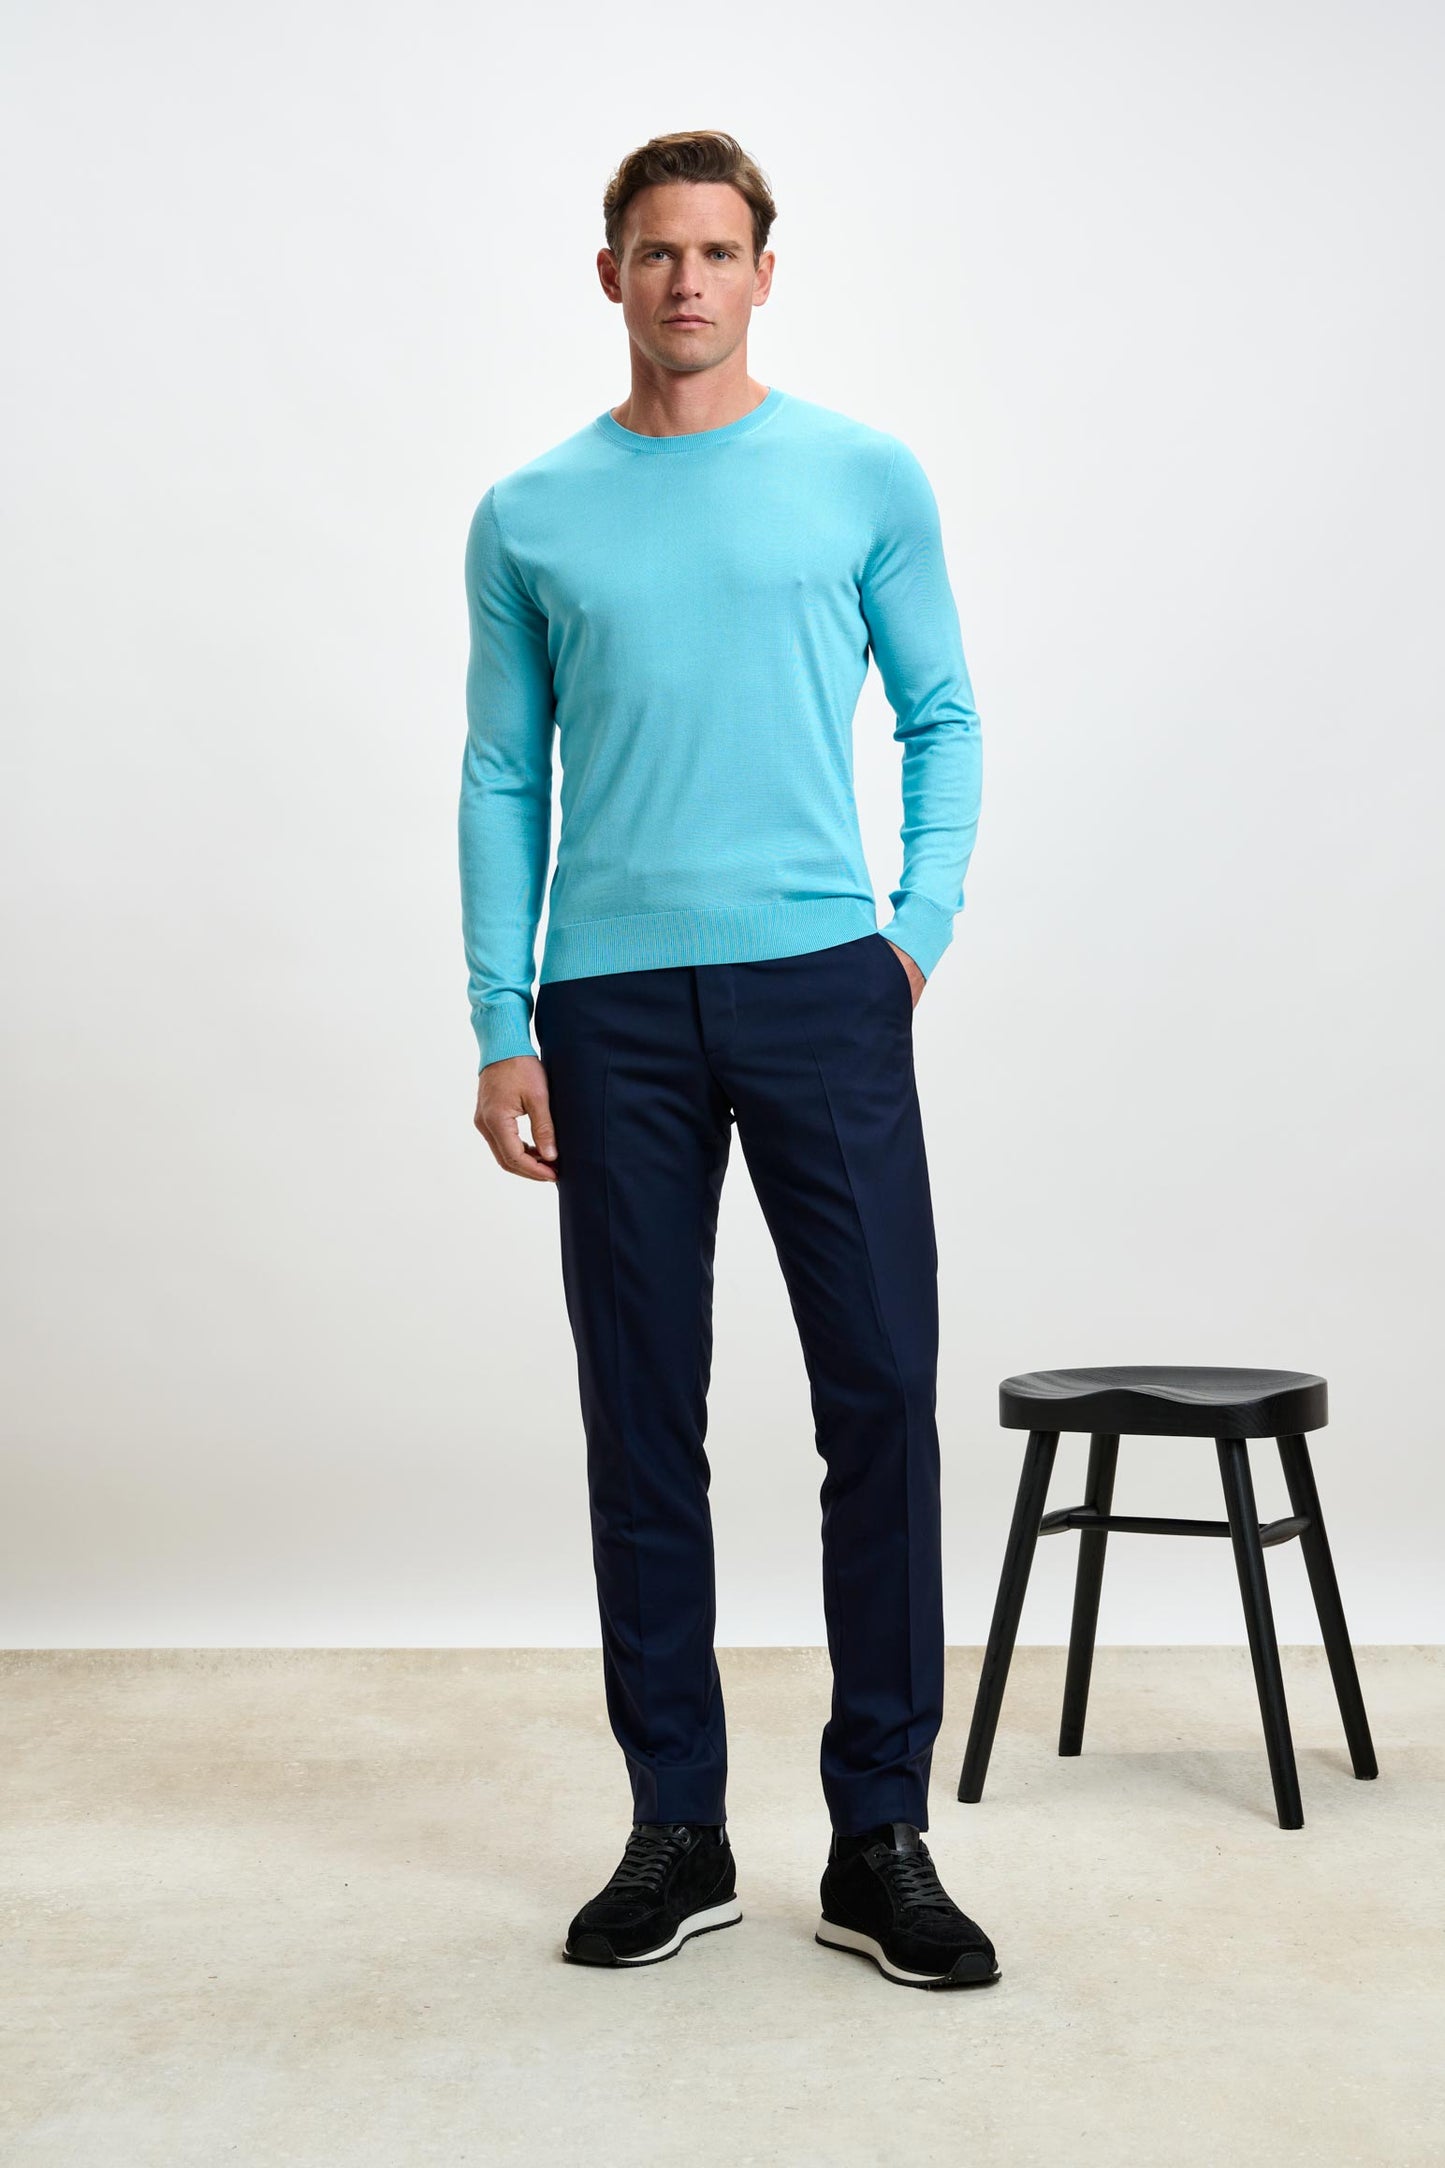 Crewe Silk Long Sleeve Sweater Turquoise Blue